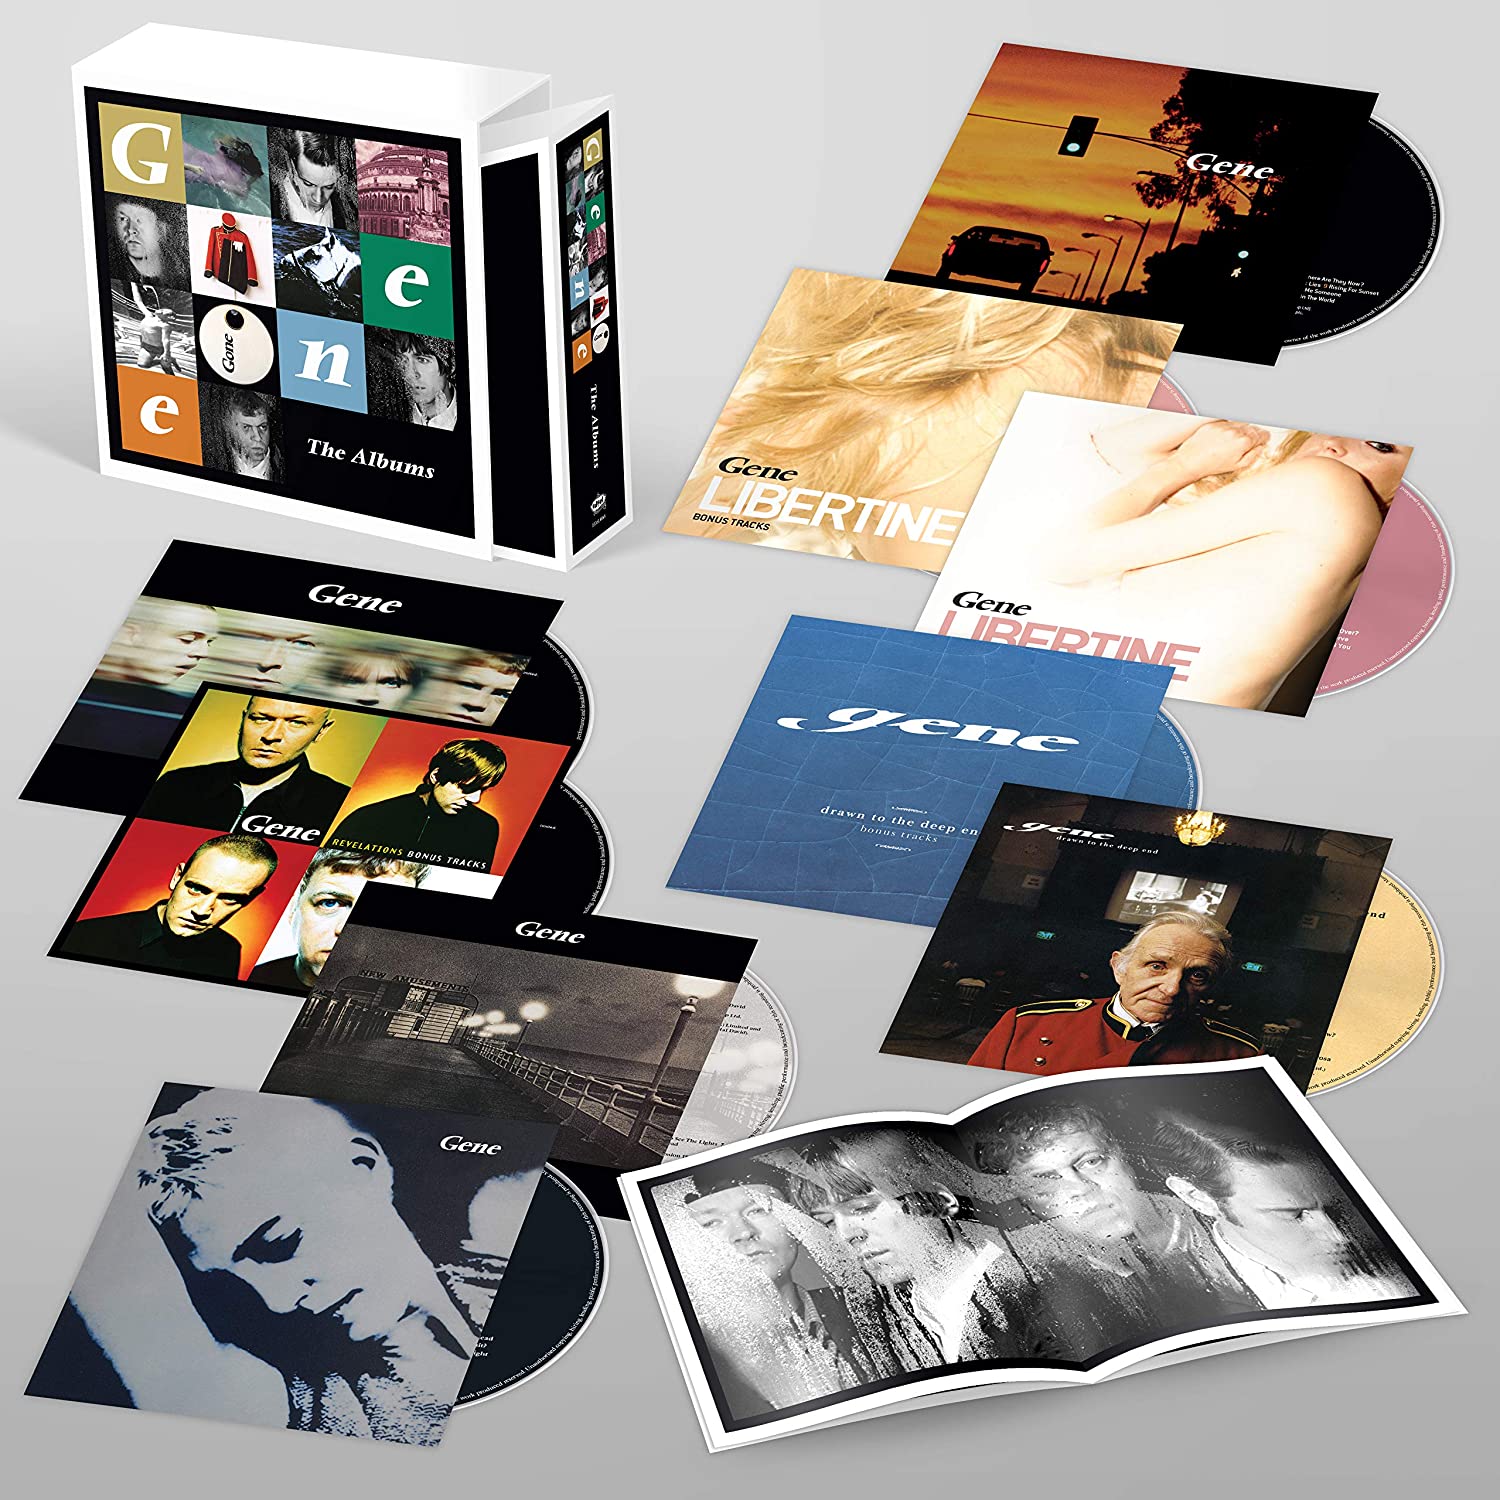 Gene (제네) - The Albums 